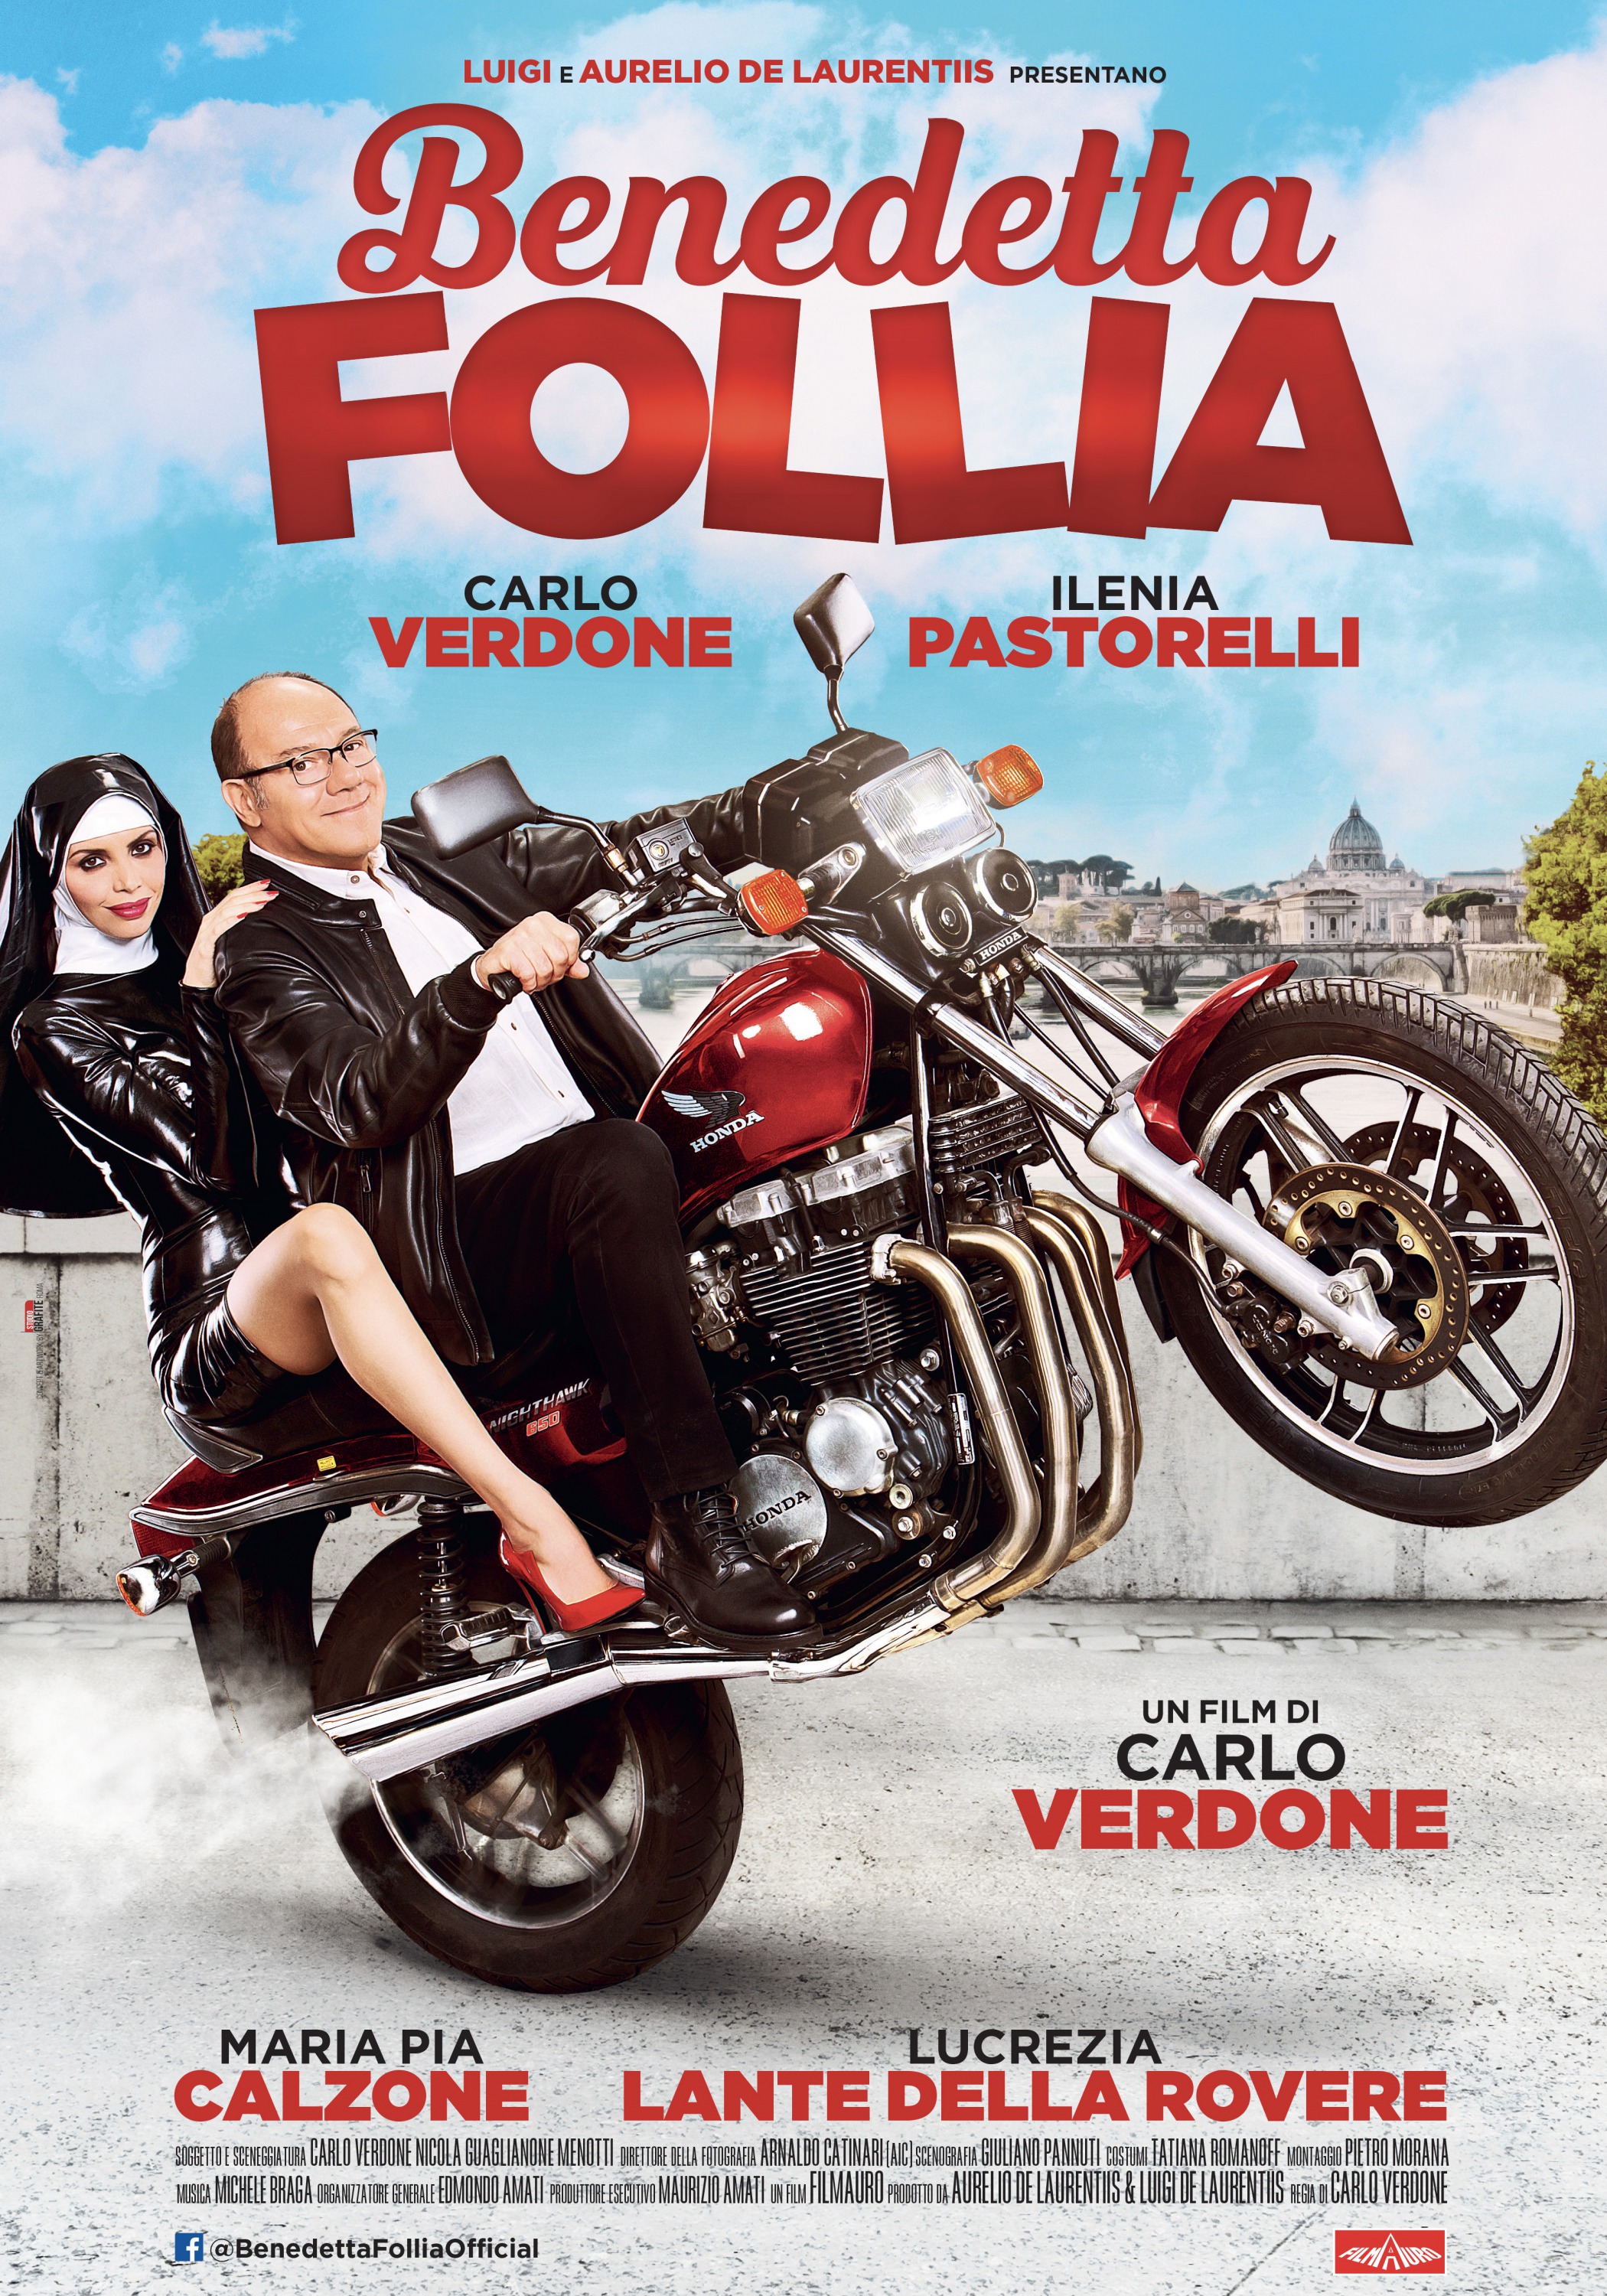 Mega Sized Movie Poster Image for Benedetta follia 